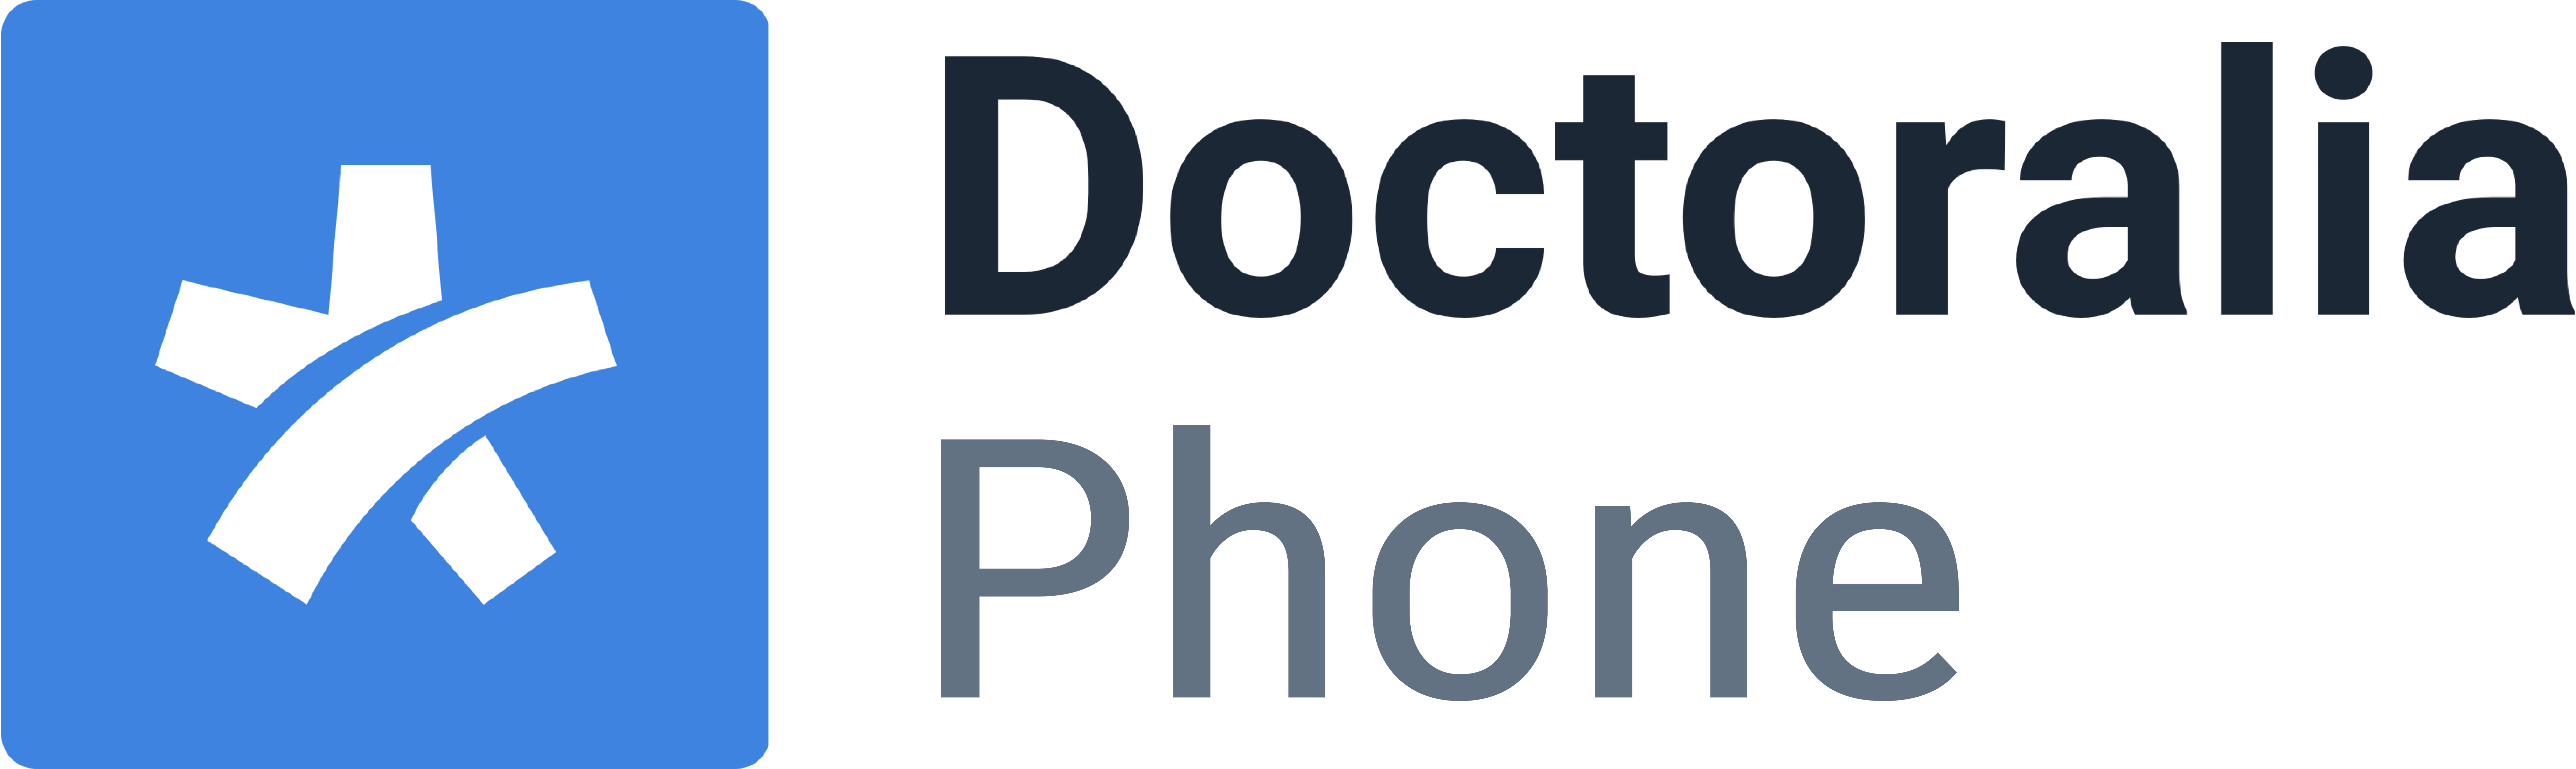 logo-doctoralia-phone